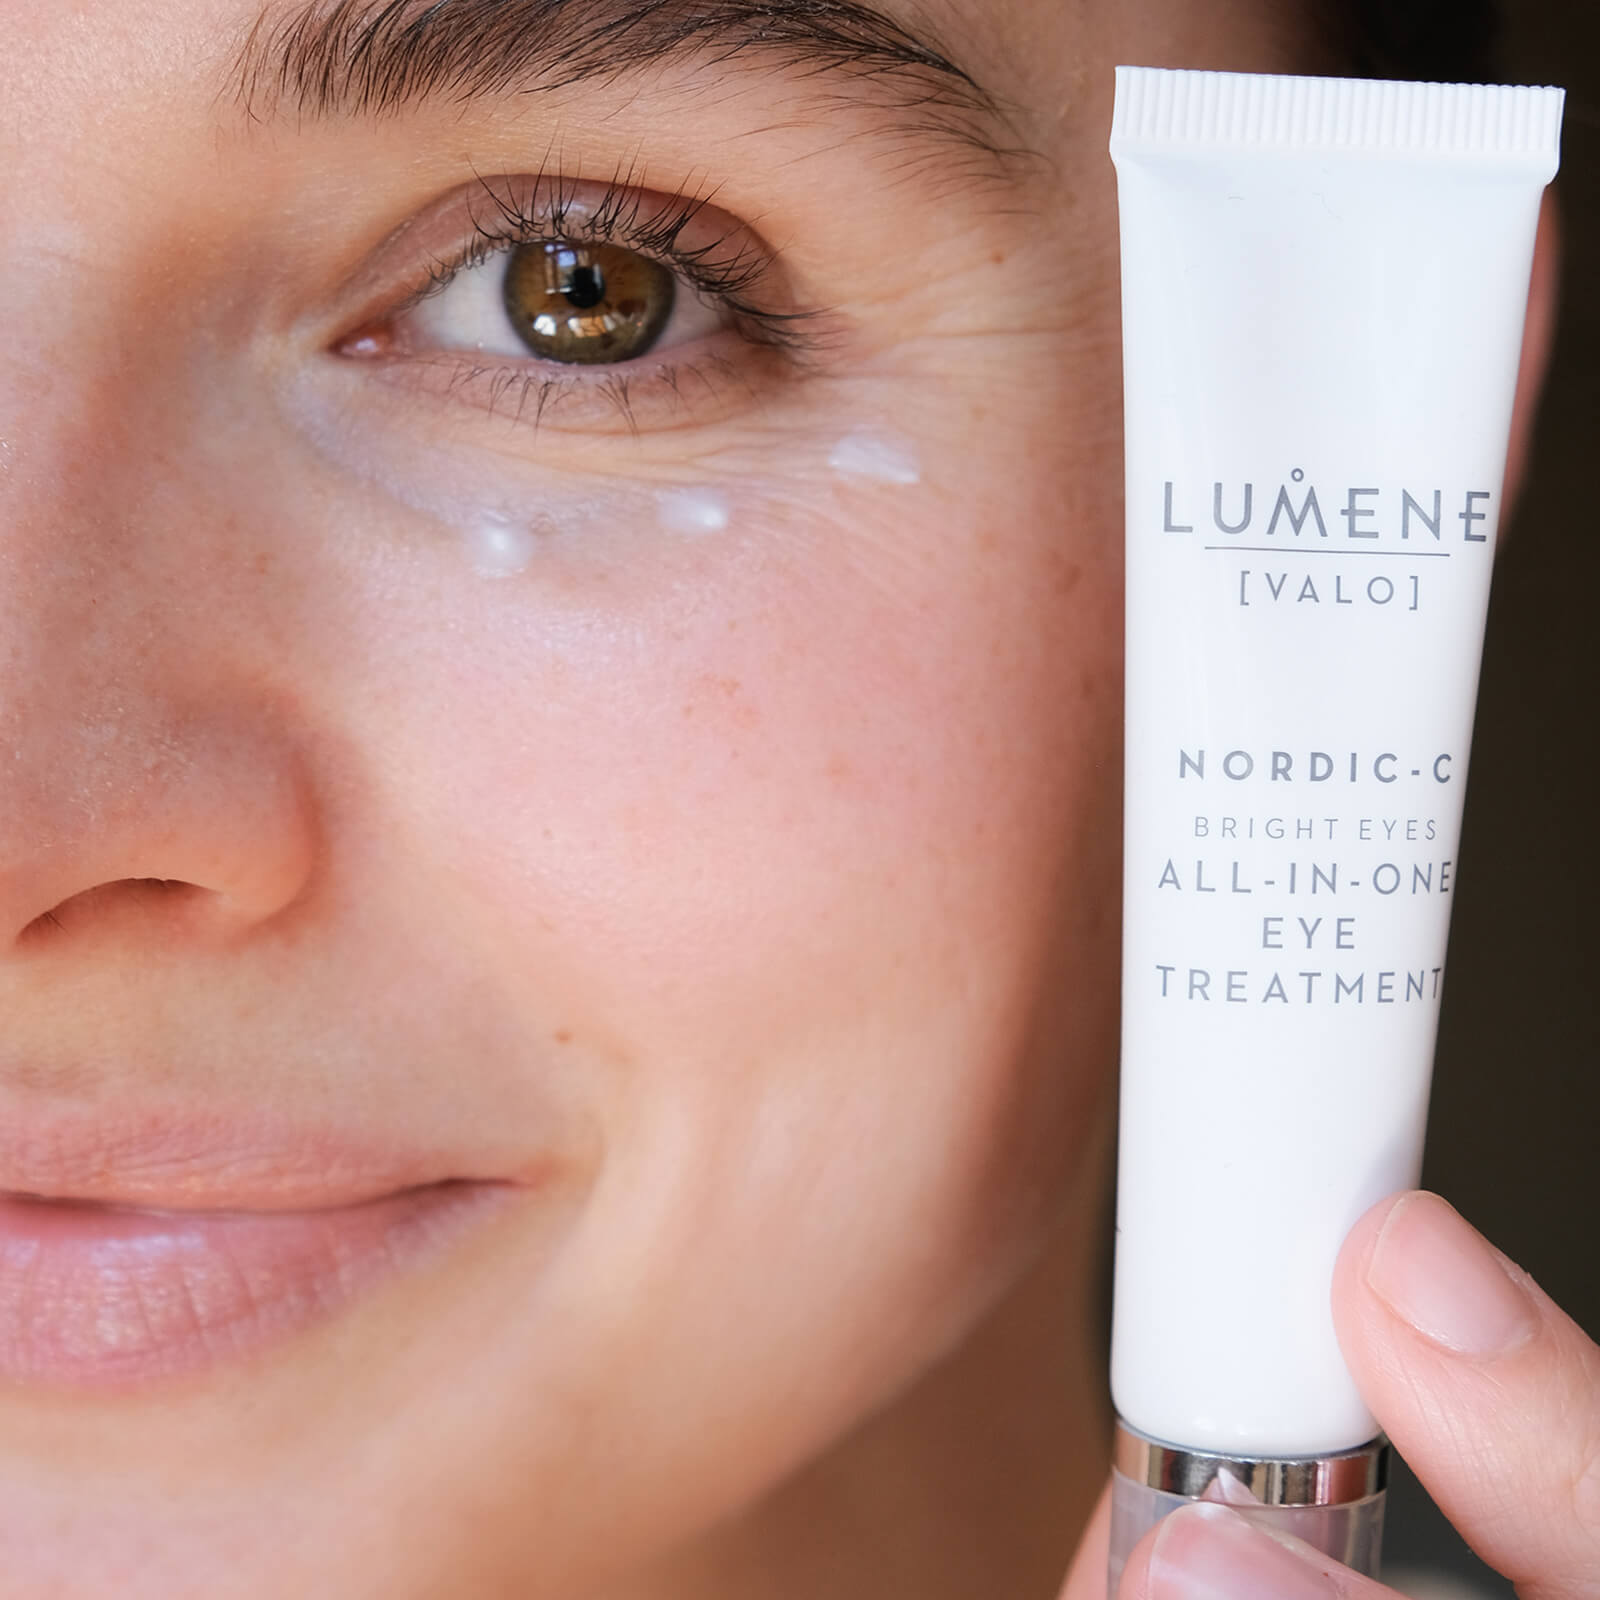 Lumene Nordic C [valo] Bright Eyes All-in-one Treatment 15ml Cosmetics & Skincare